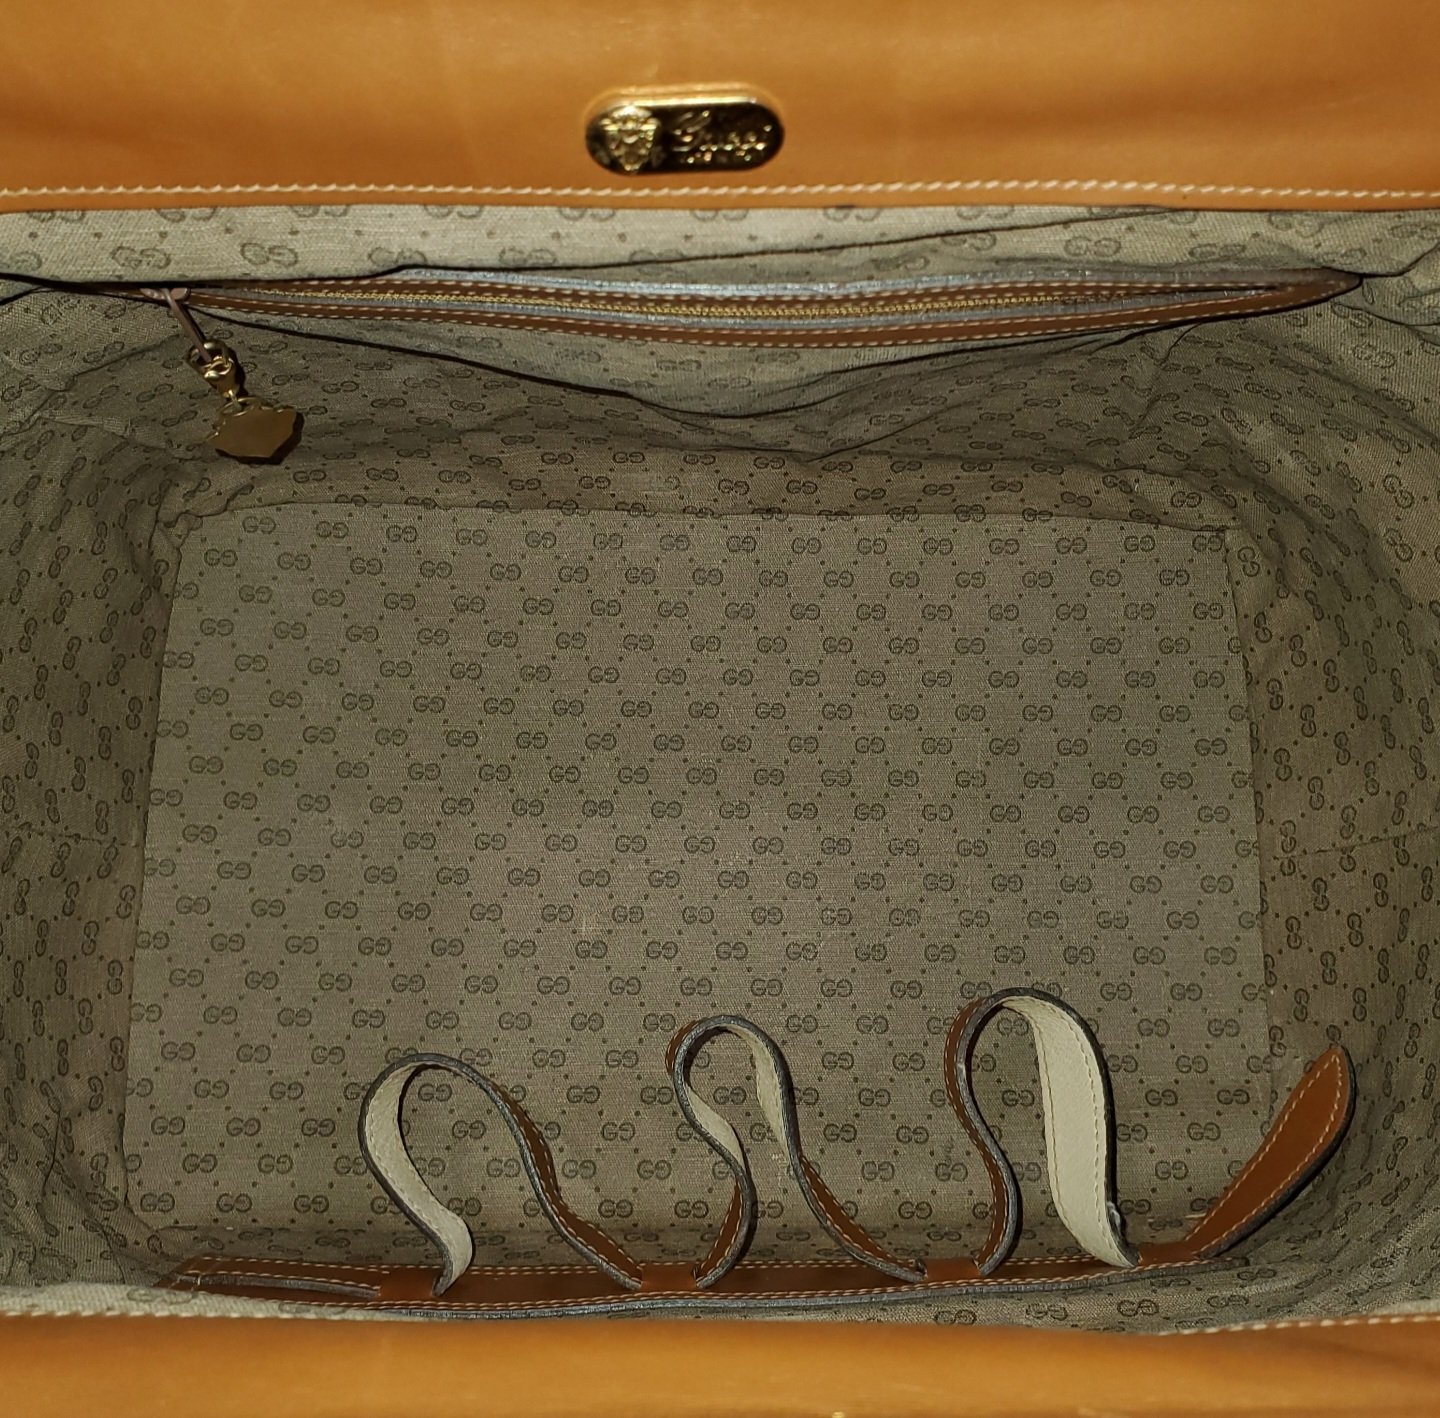 Sold at Auction: Gucci, GUCCI FLORA HALF MOON CANVAS BAMBOO RING HOBO BAG